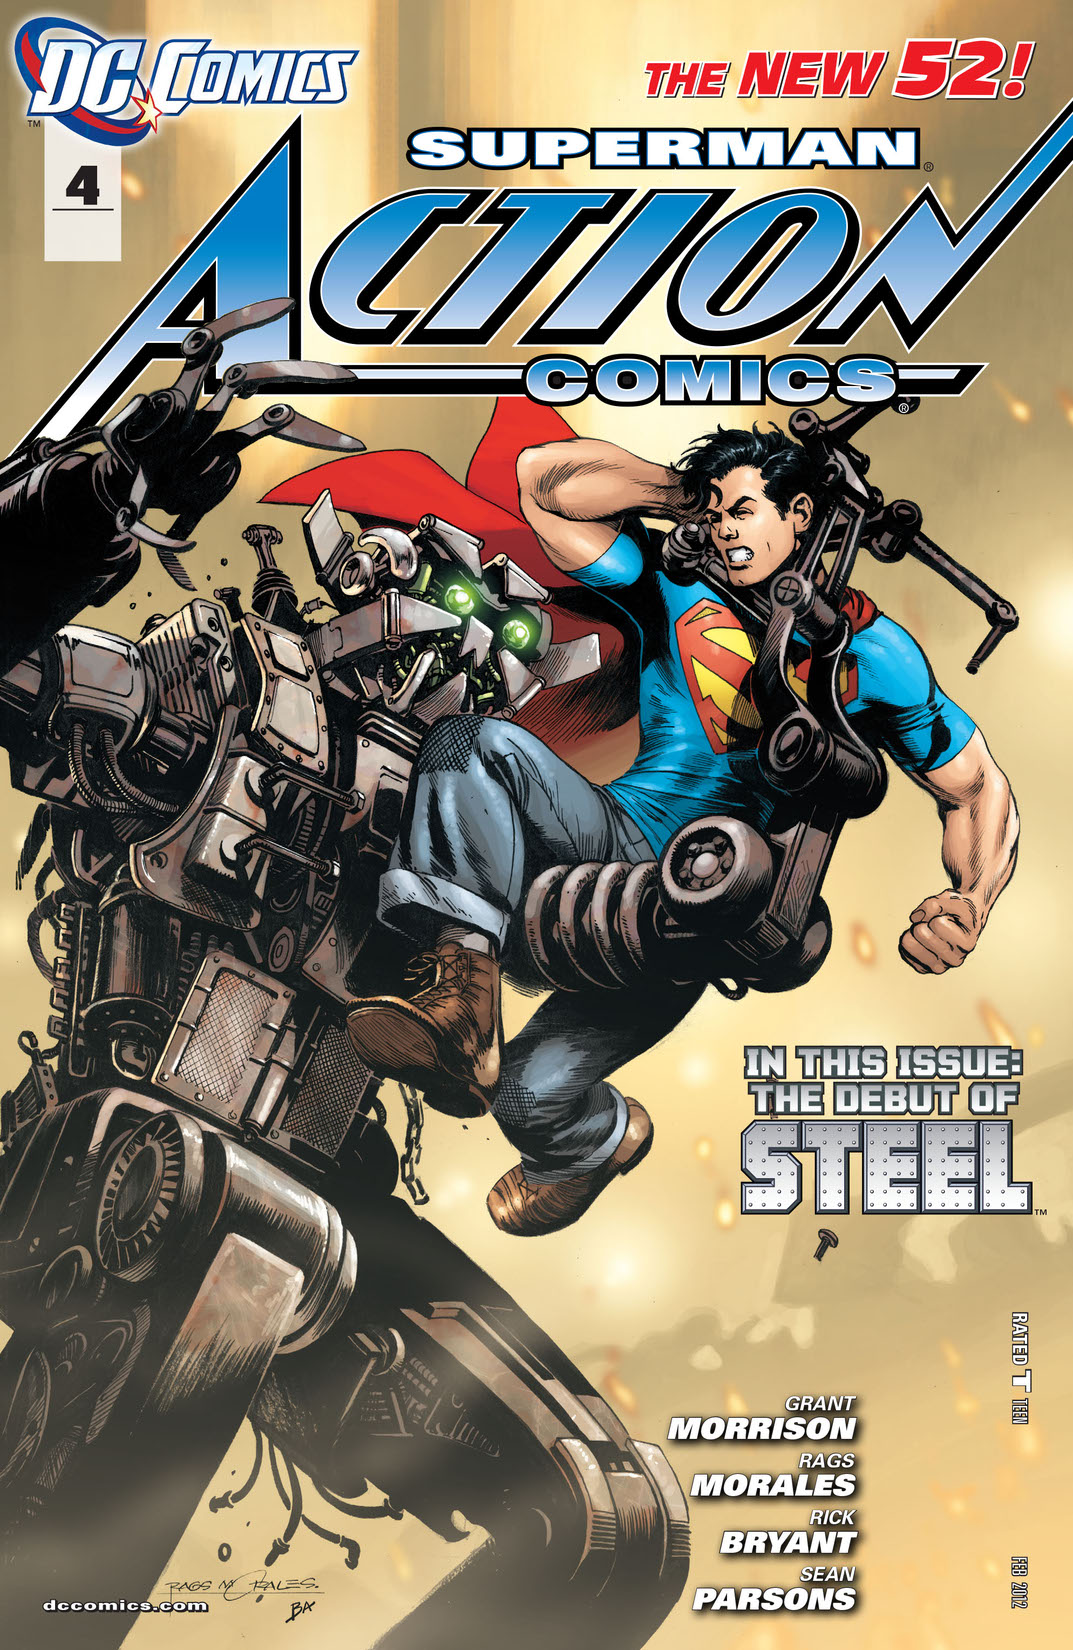 Action Comics (2011-) #4 preview images